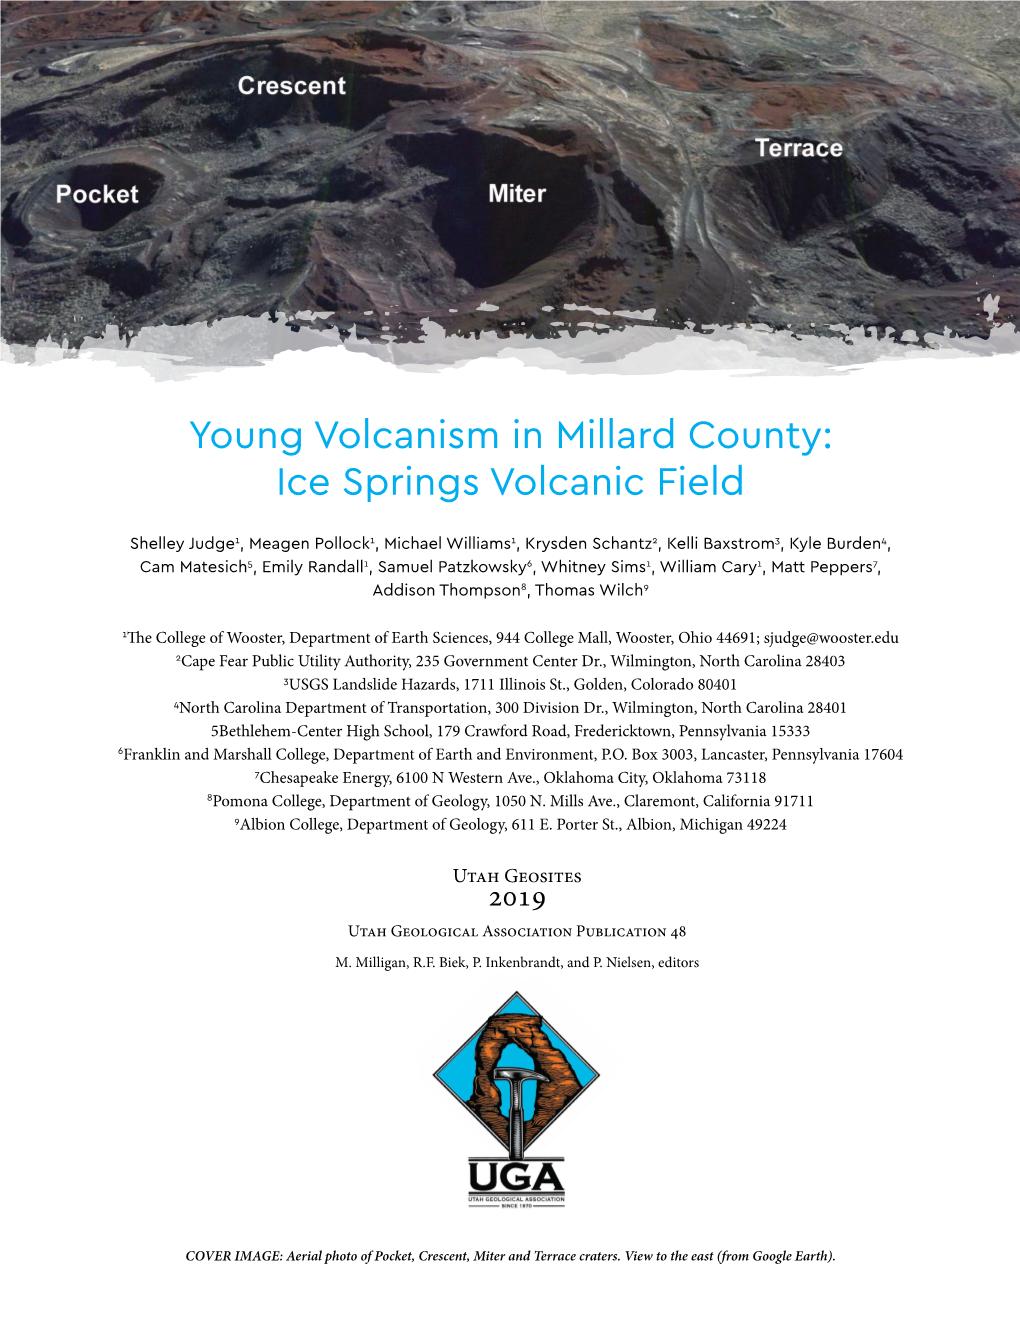 Ice Springs Volcanic Field